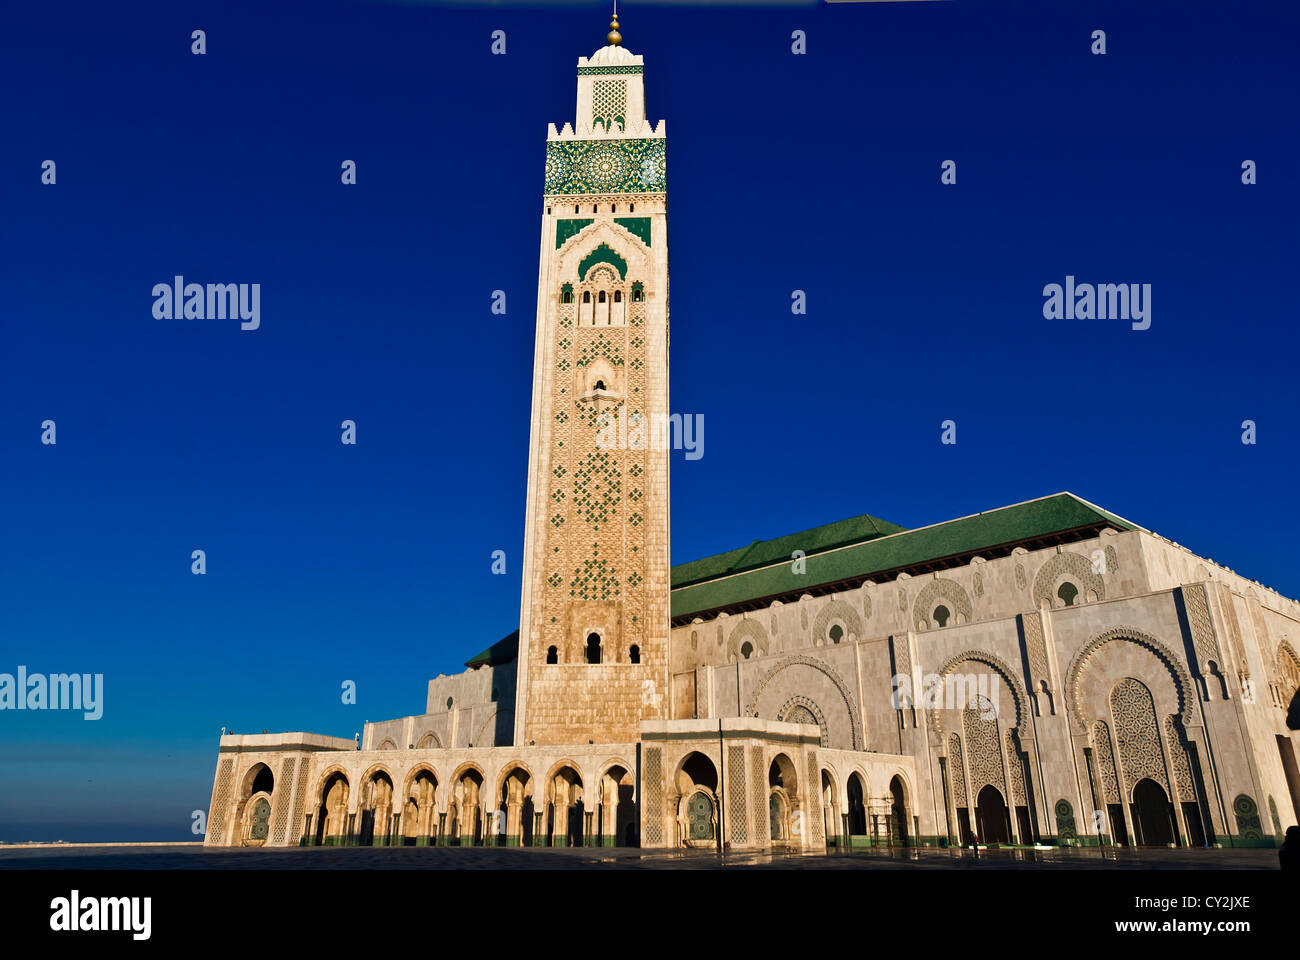 King Hassan II Mosque, Casablanca, Morocco Stock Photo